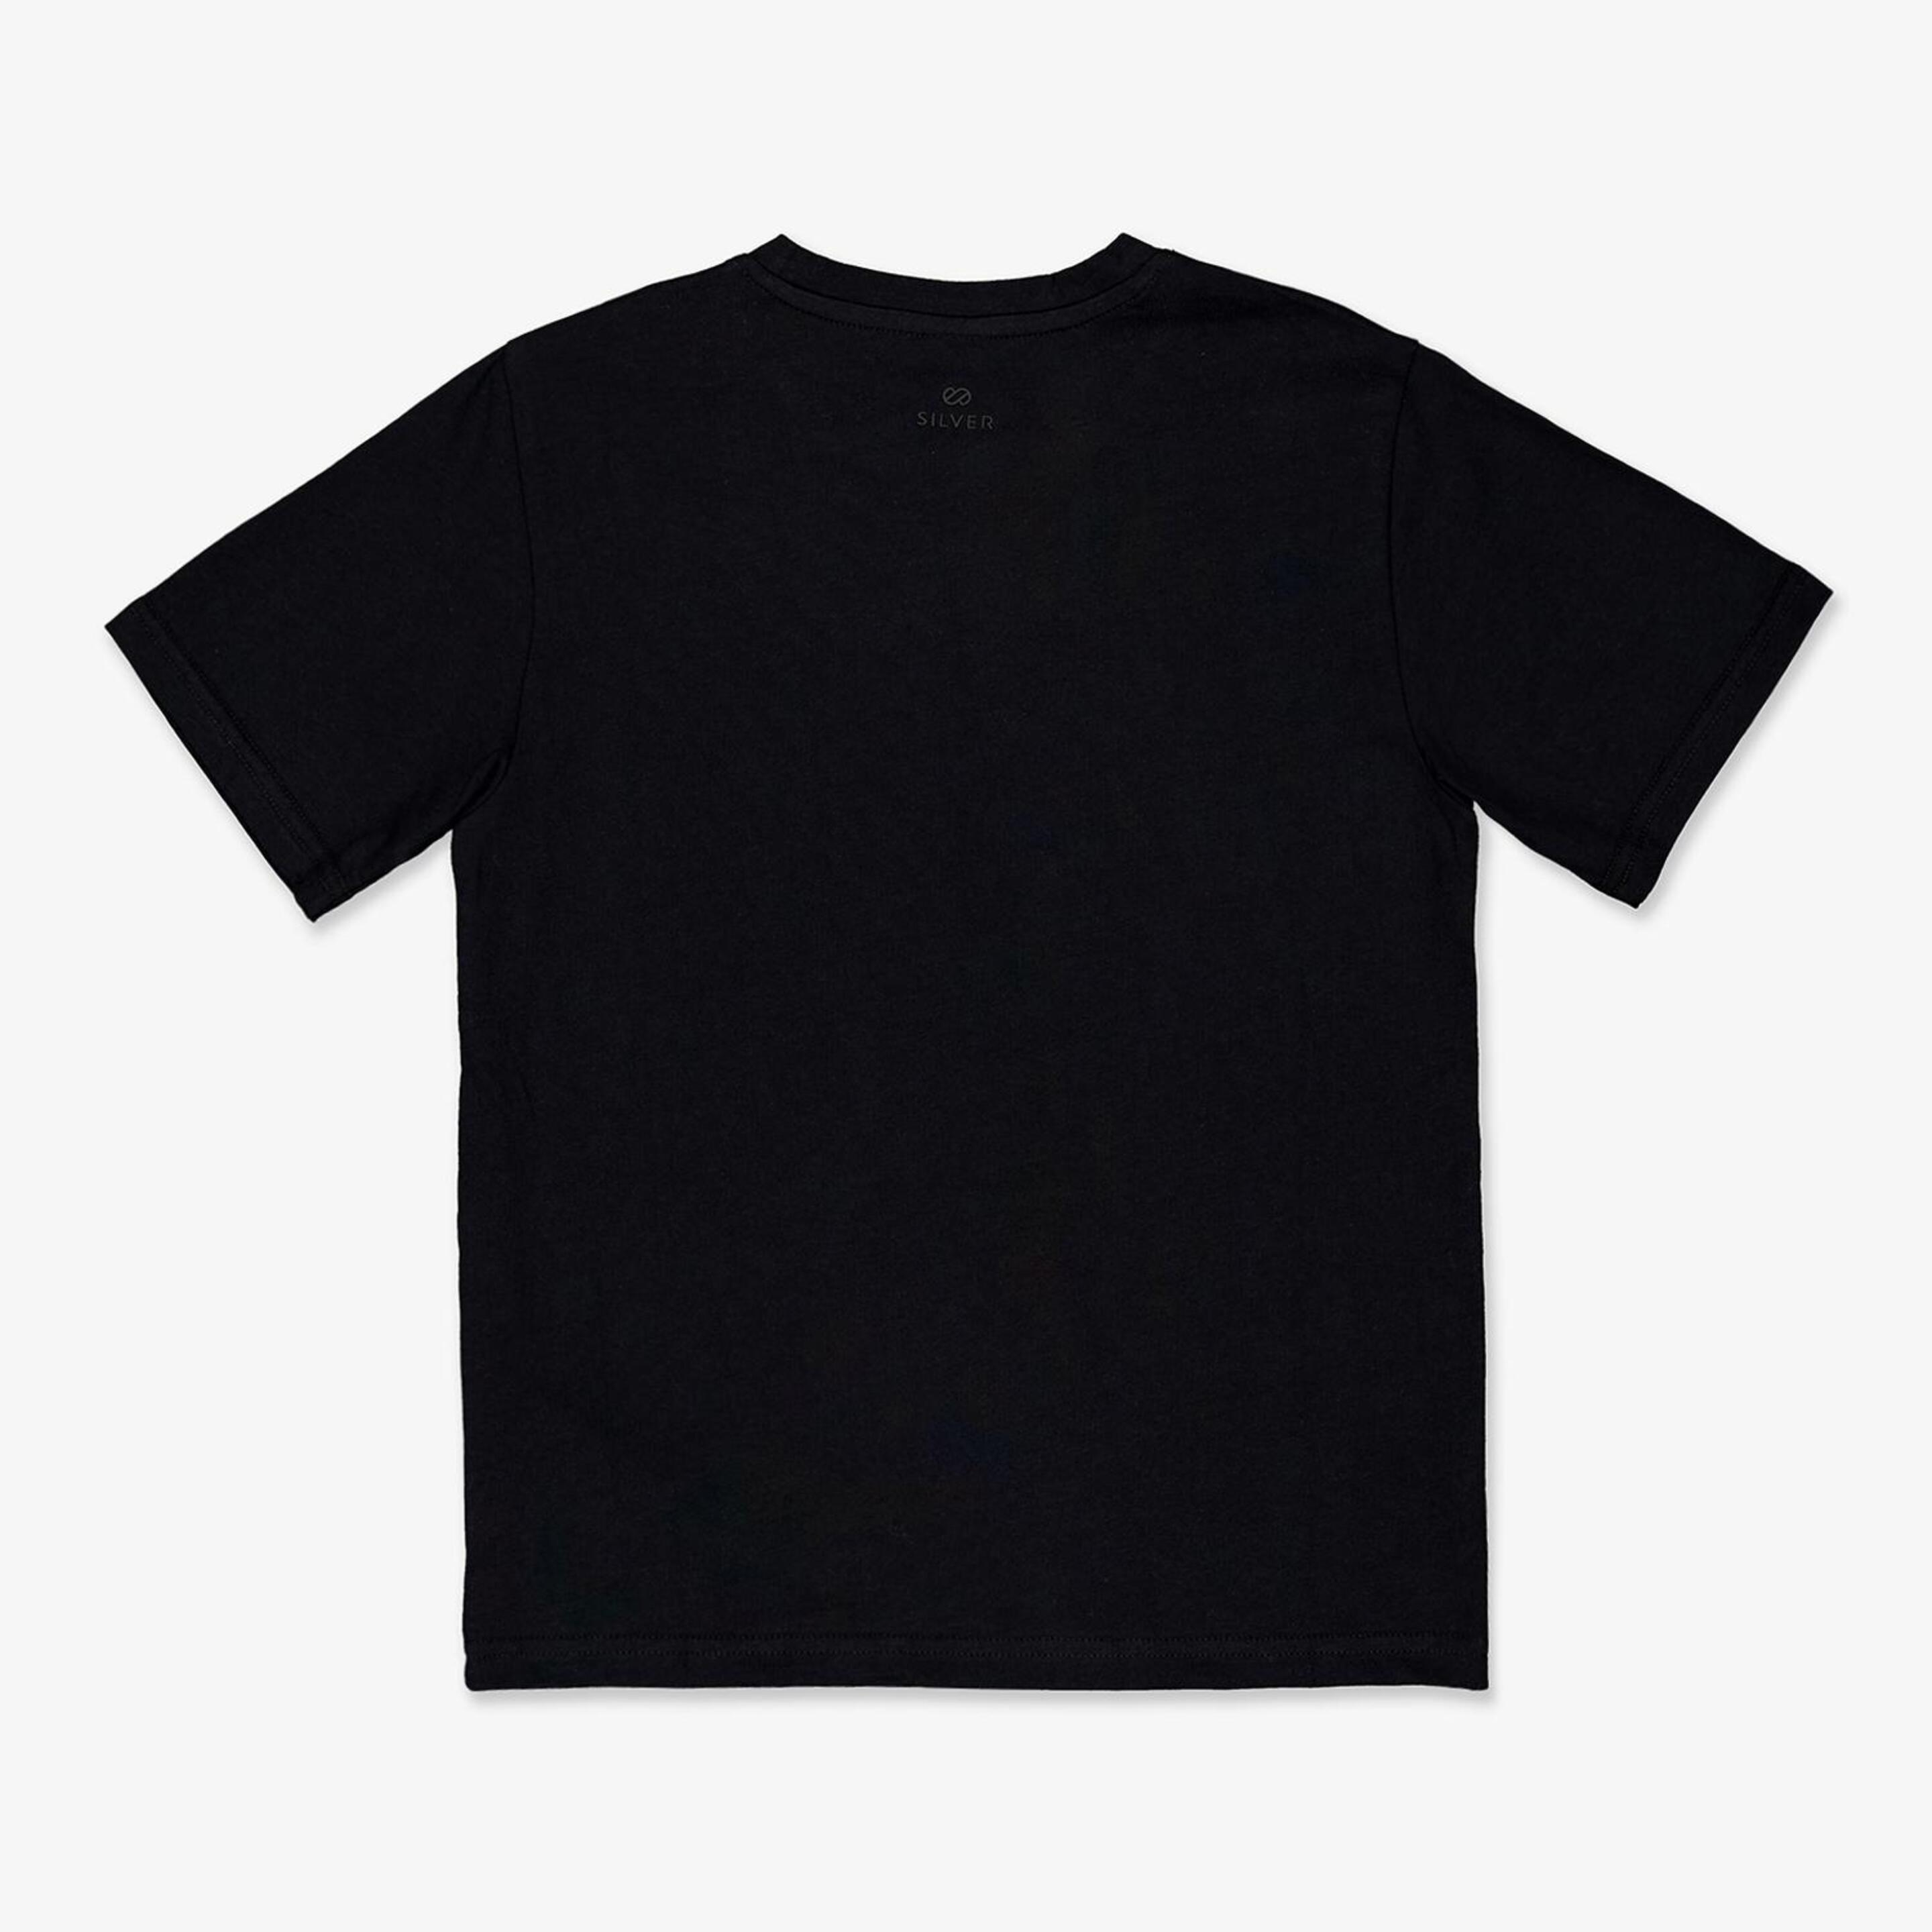 Silver Unlimited - Negro - Camiseta Niño